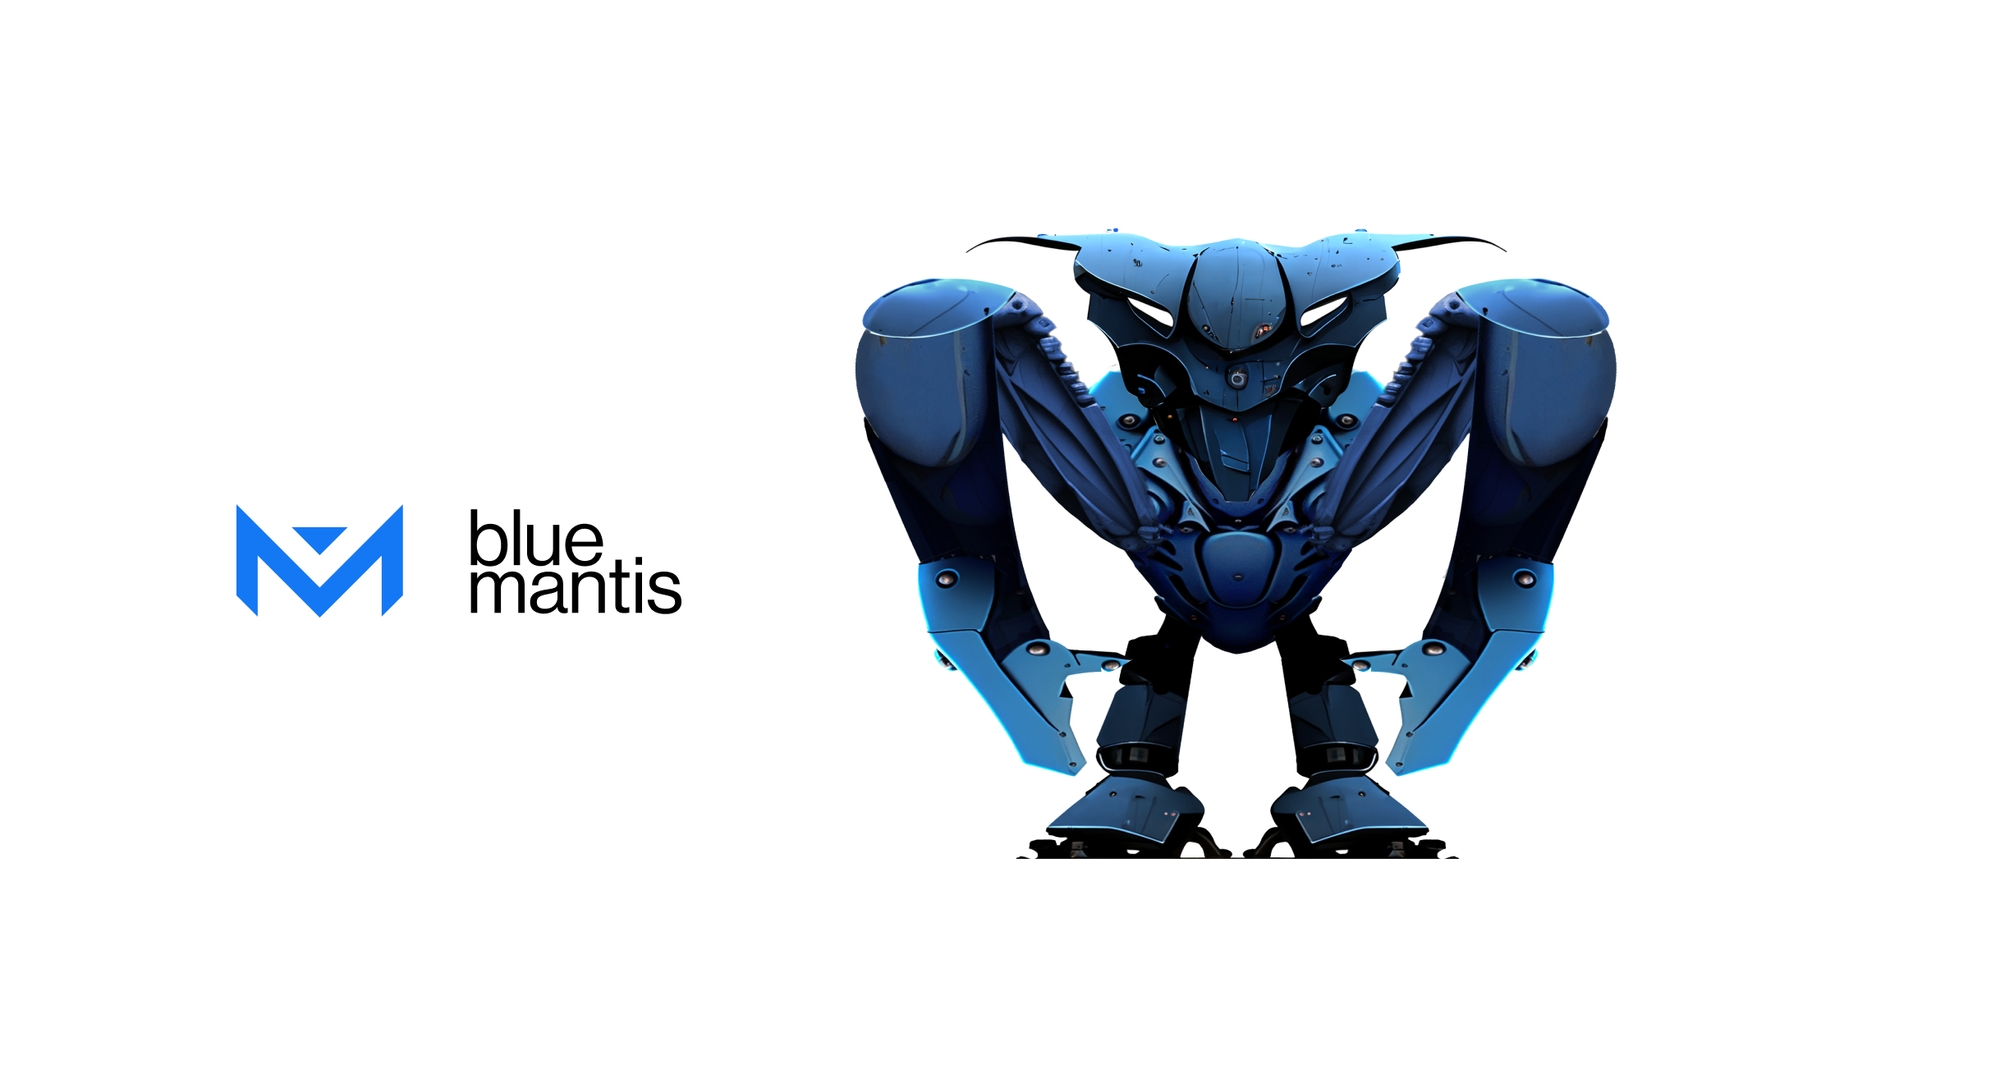 Blue Mantis logo with mascot